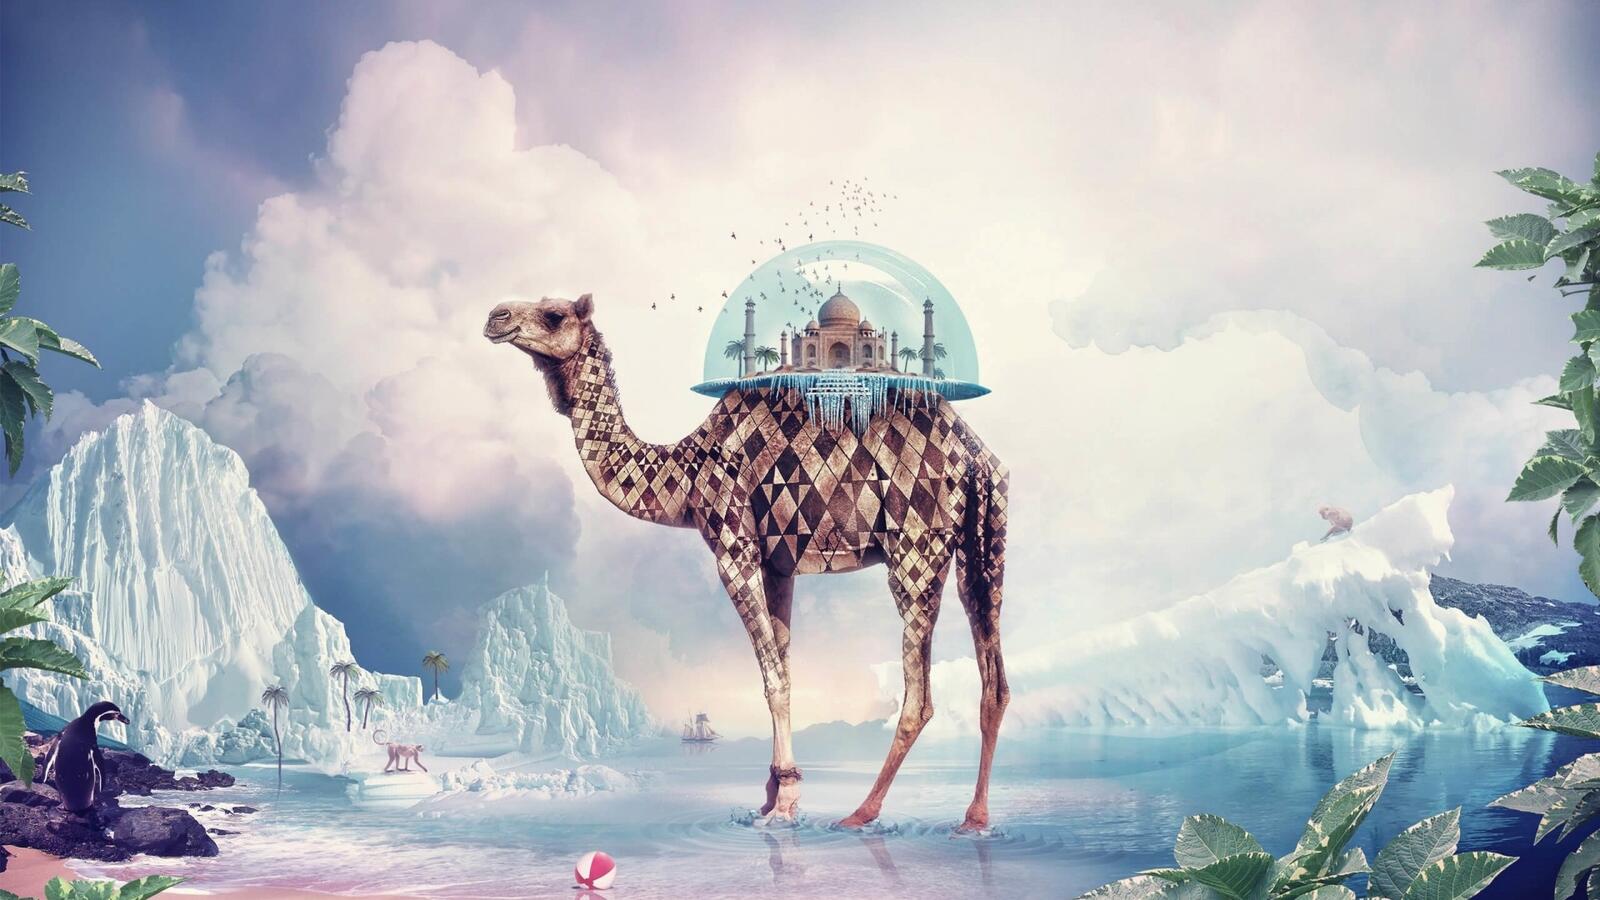 Wallpapers photoshop giraffe penguin on the desktop